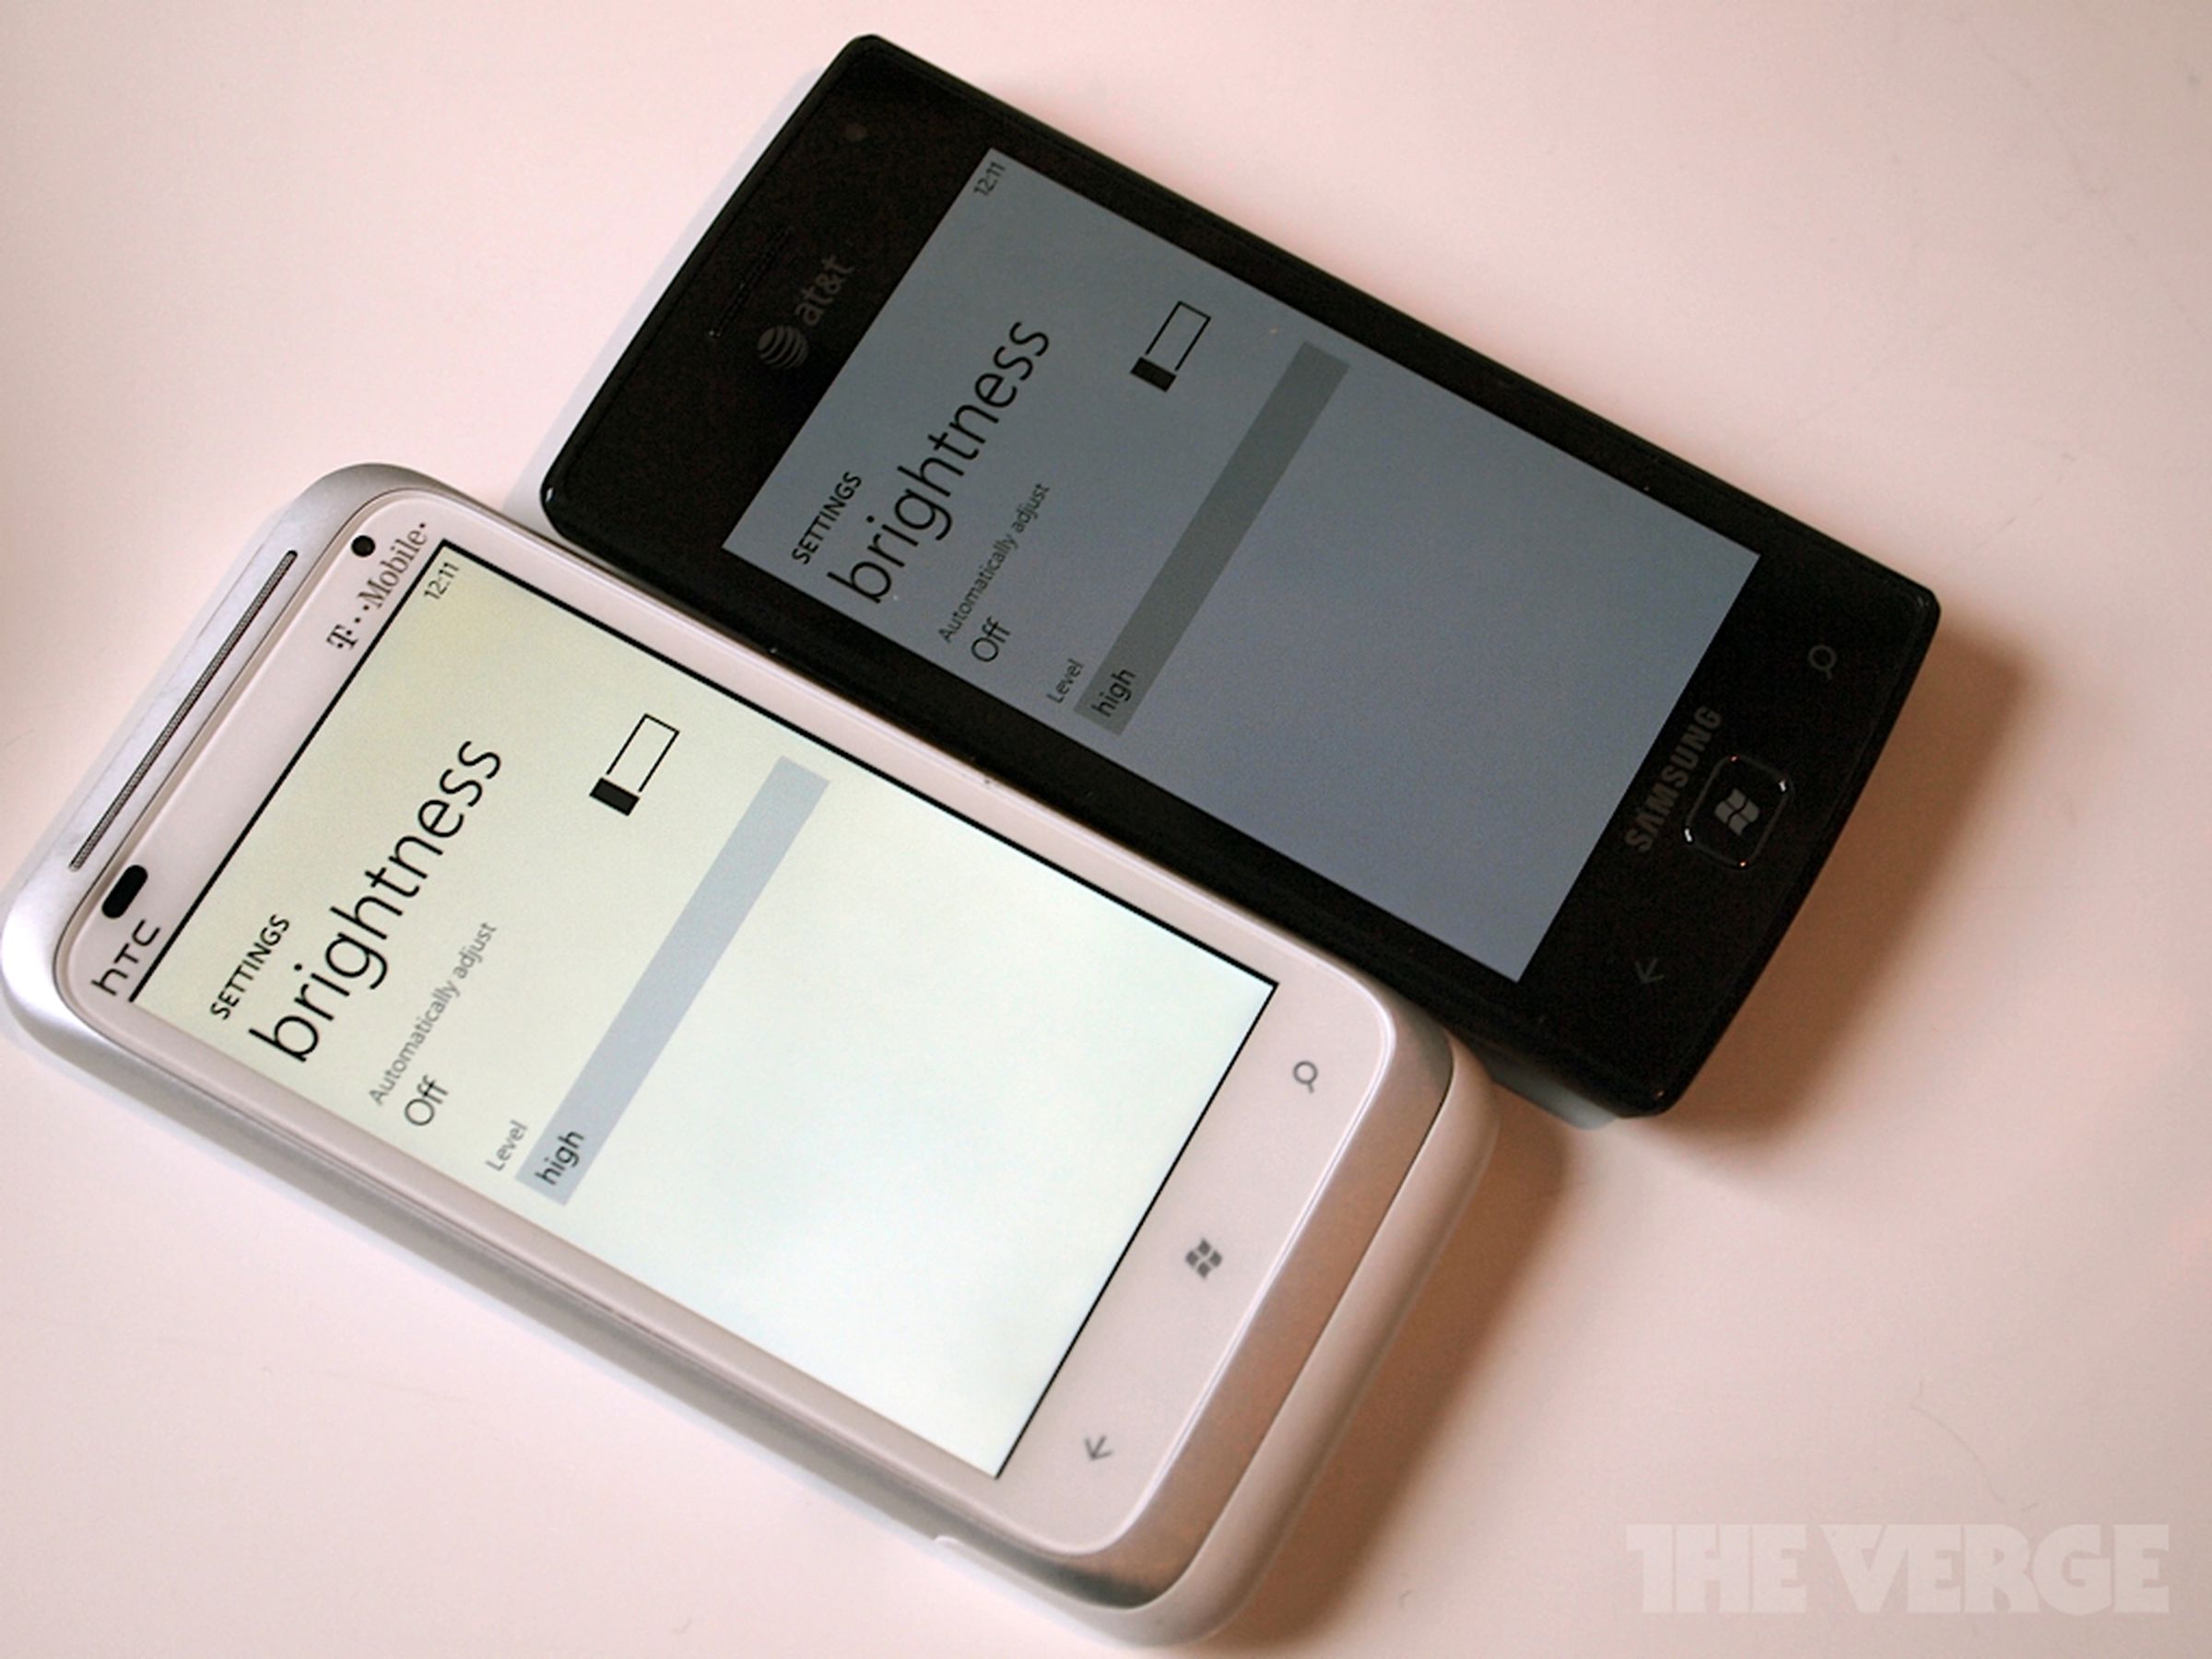 HTC Radar 4G vs. Samsung Focus Flash